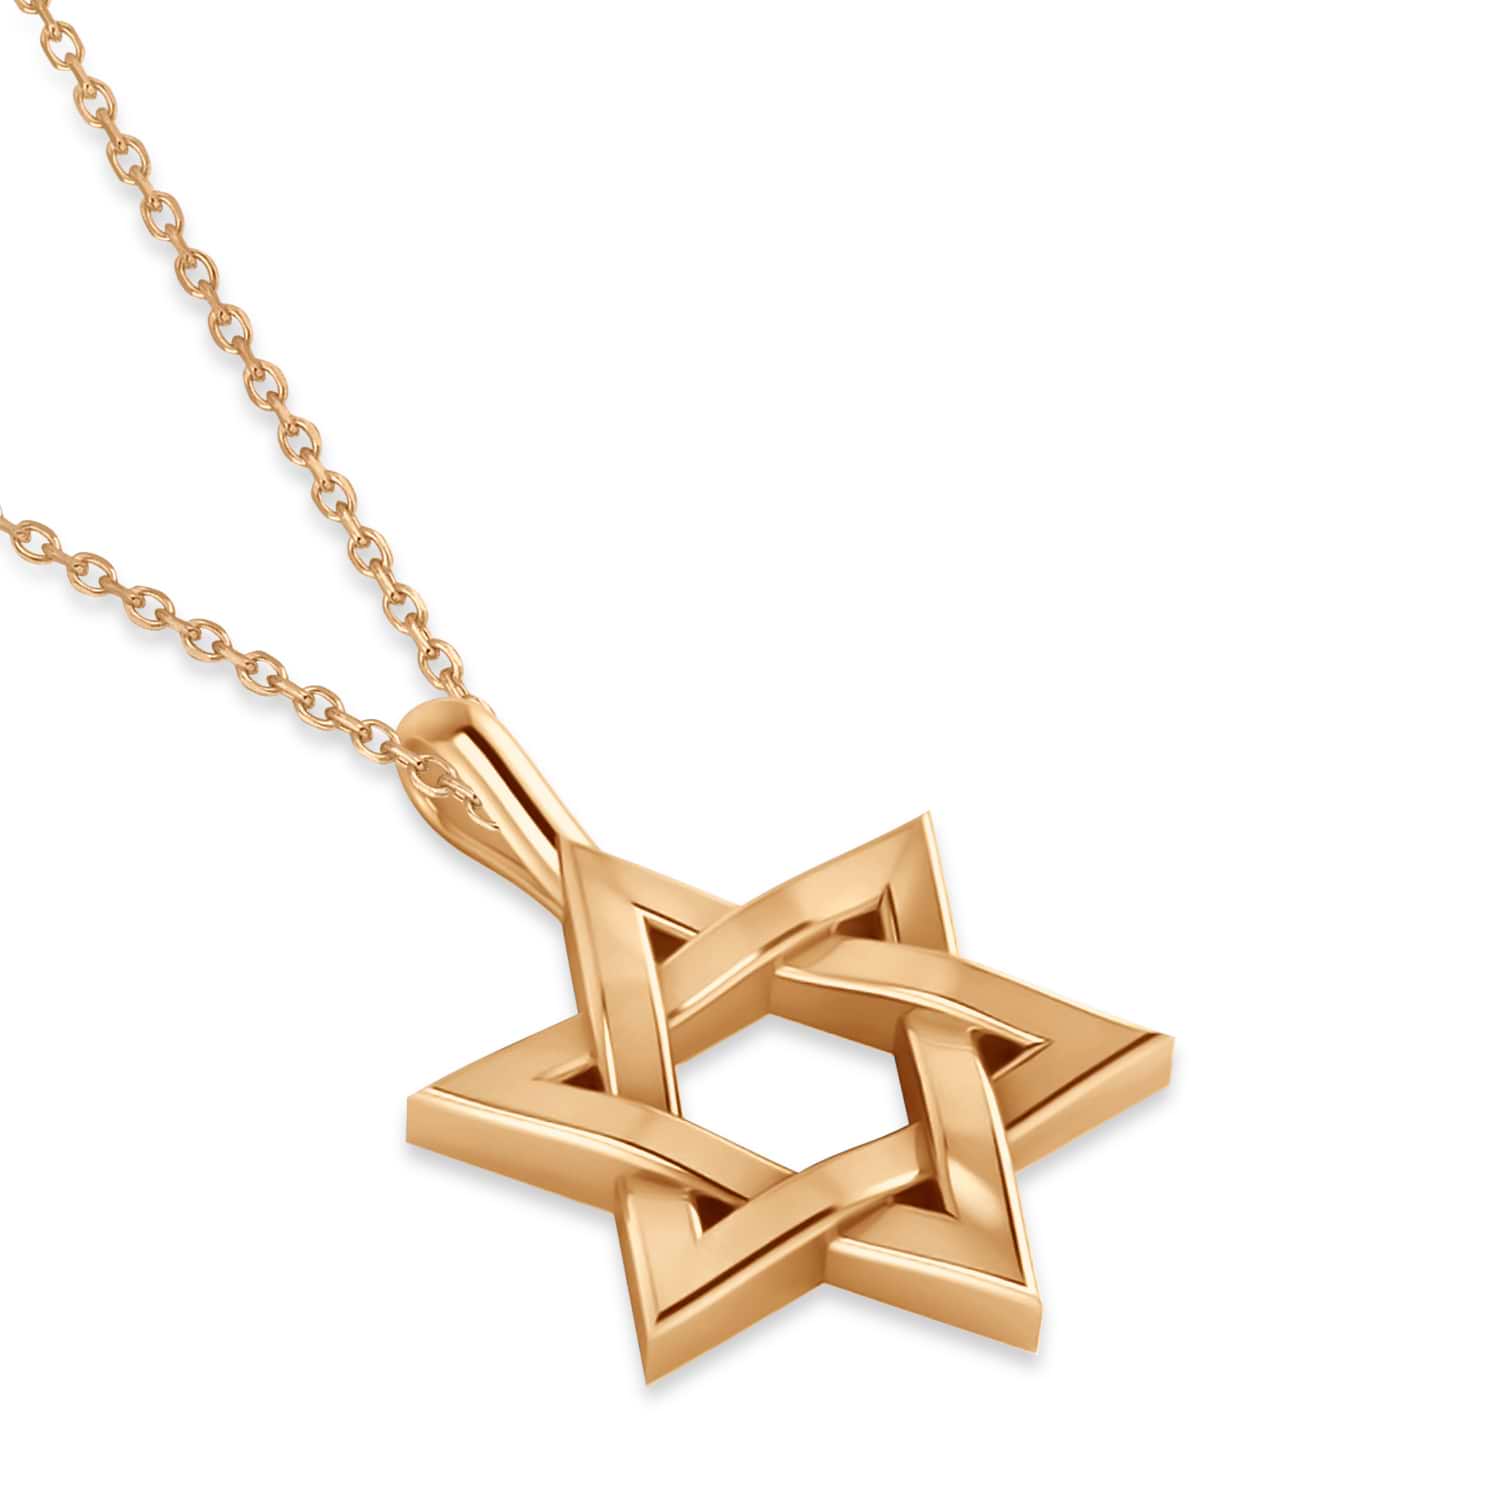 Jewish Star of David Pendant Necklace 14K Rose Gold